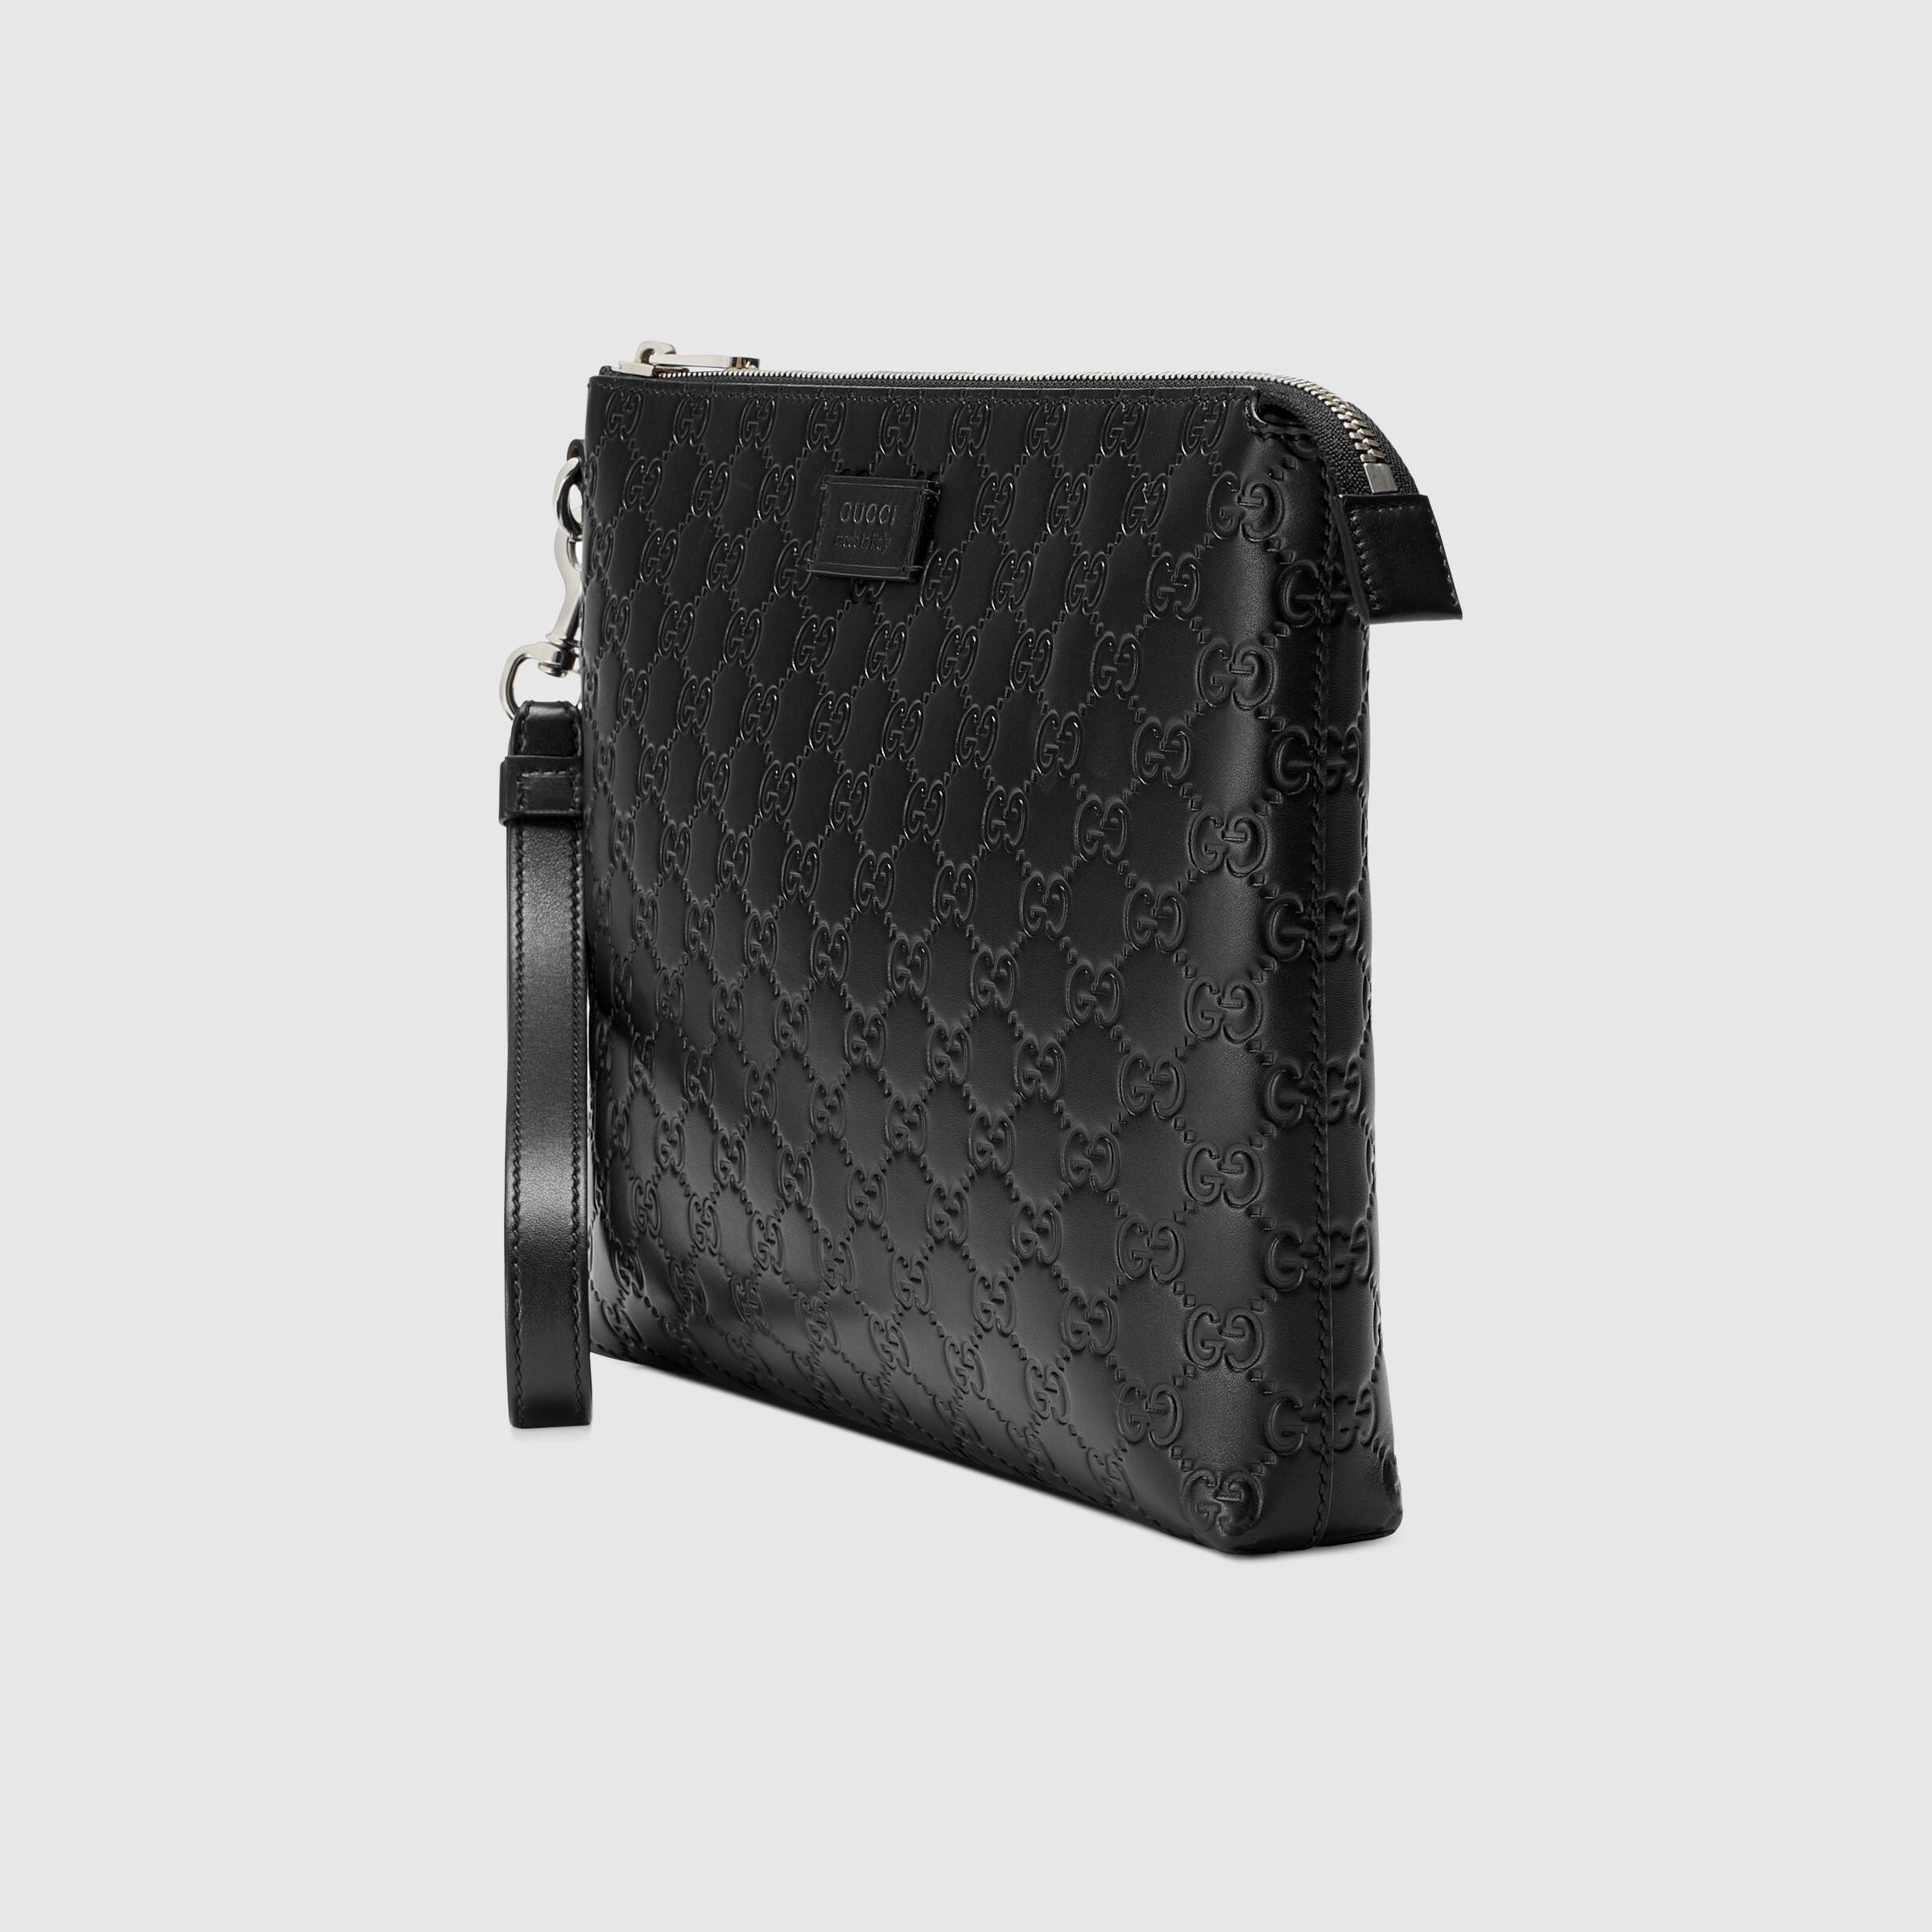 Gucci Signature Leather Men’s Bag